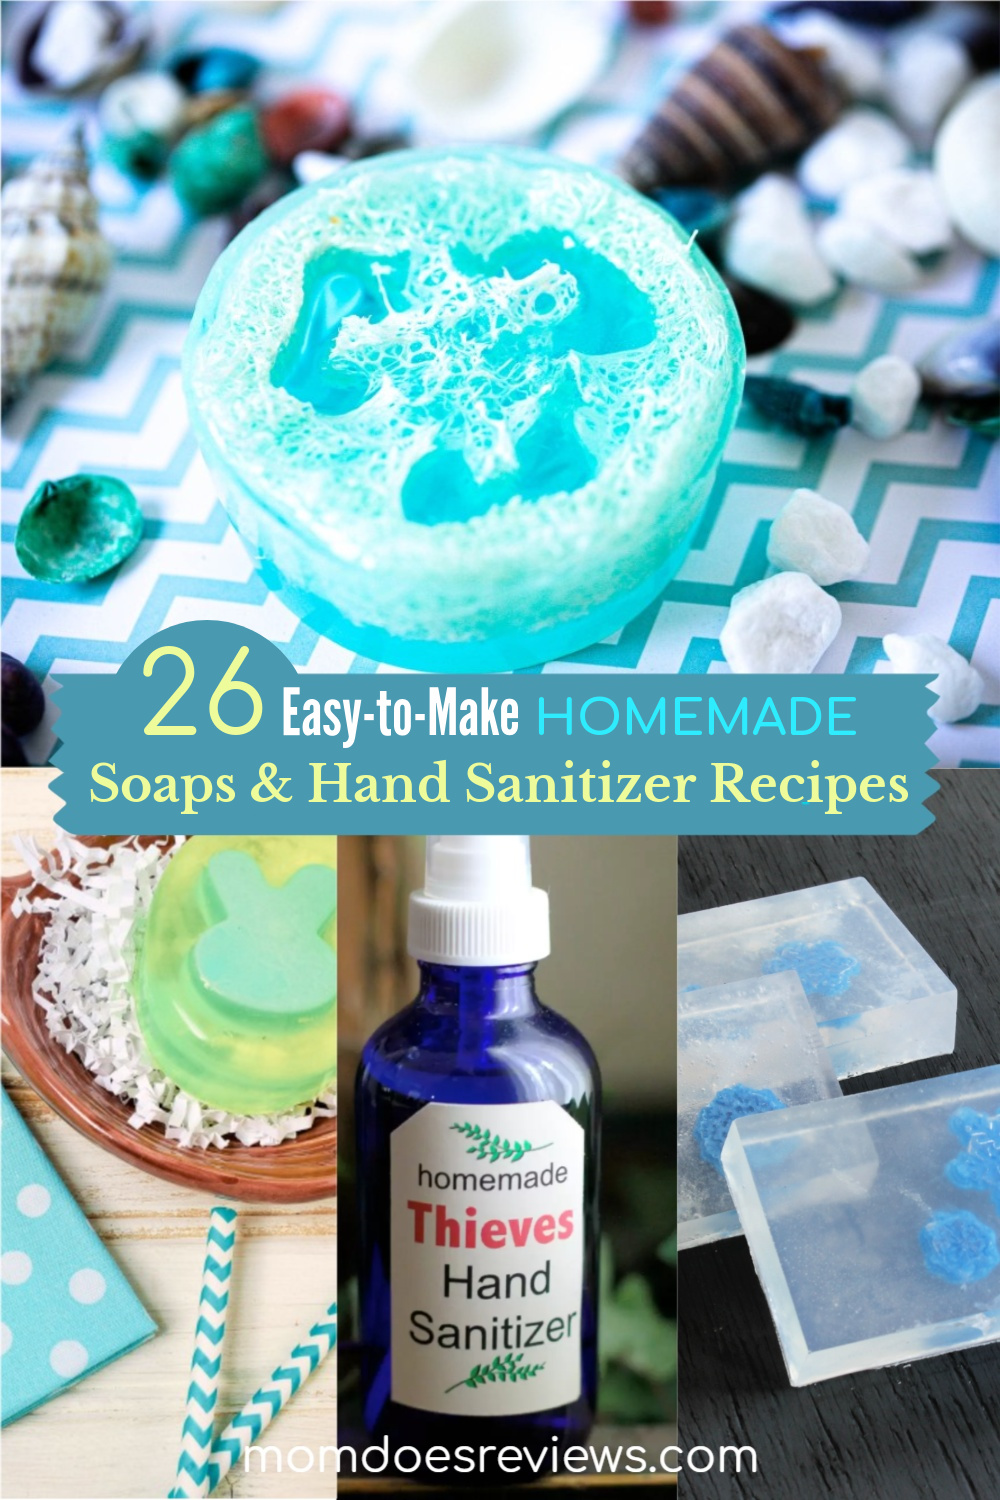 26 Easy-to-Make Homemade Soaps & Hand Sanitizer Recipes #handsanitizer #handsoaps #DIY